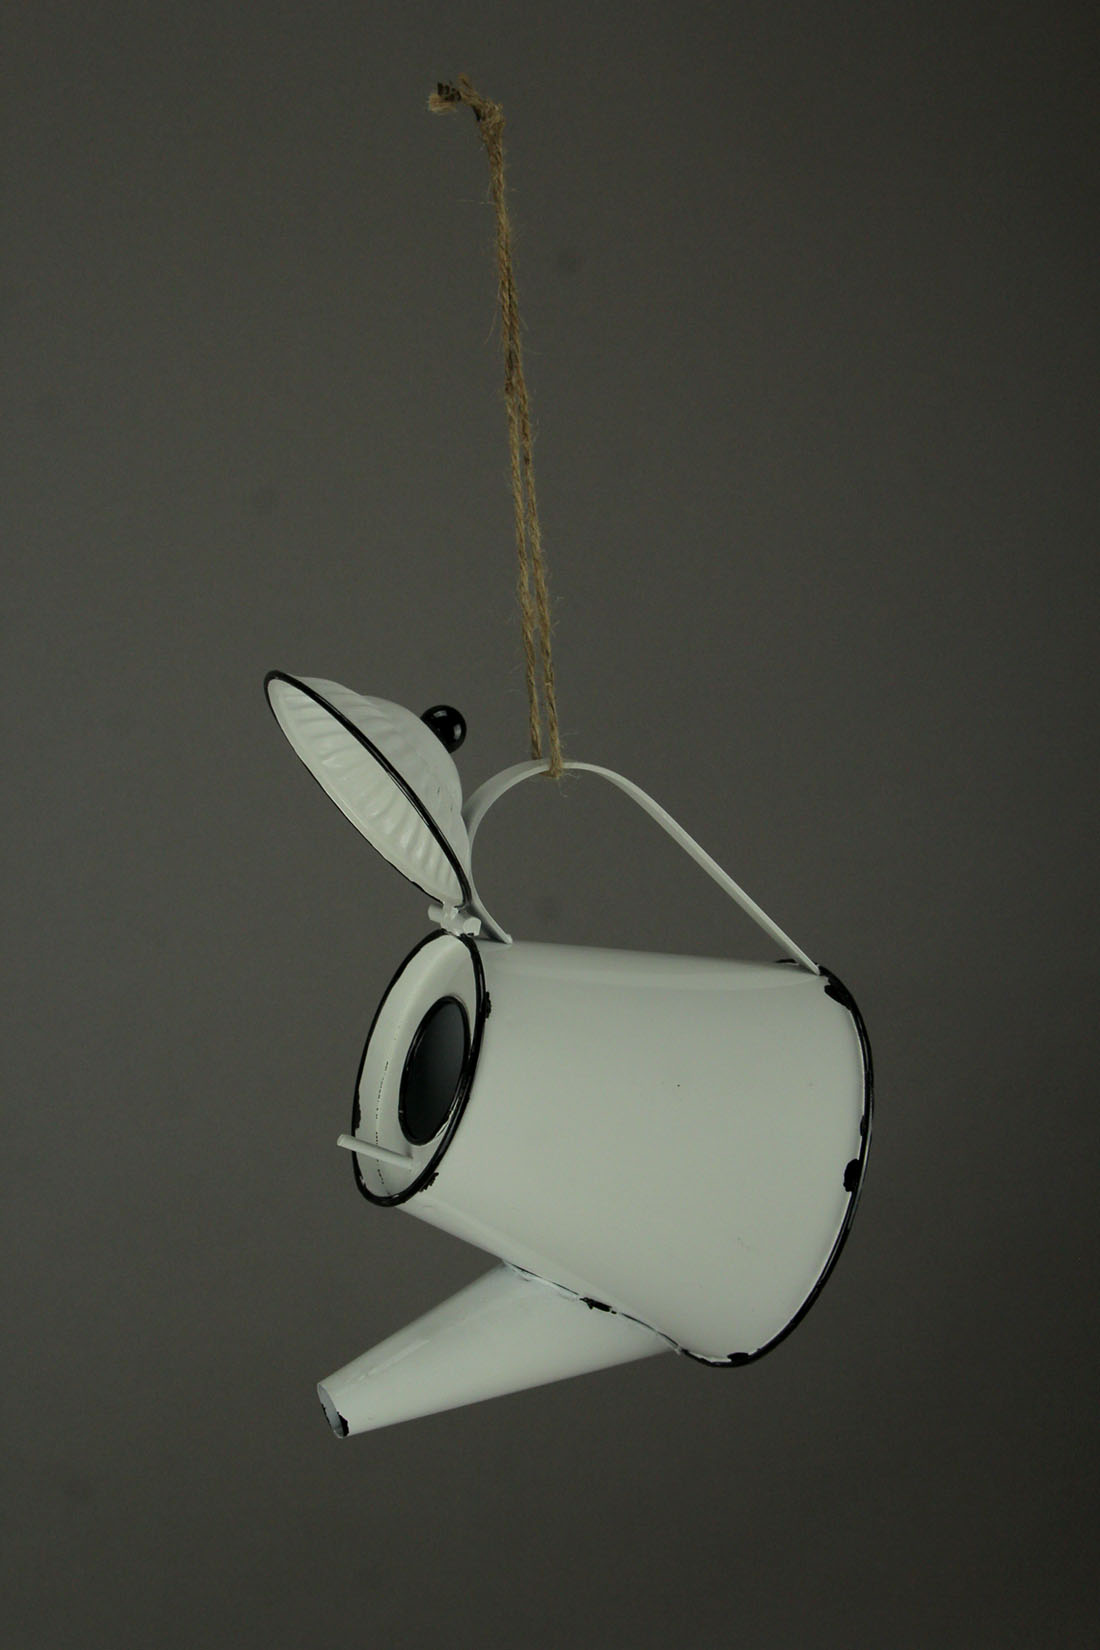 DE LEON White Enamel Metal Rustic Tea Kettle Decorative Hanging Birdhouse